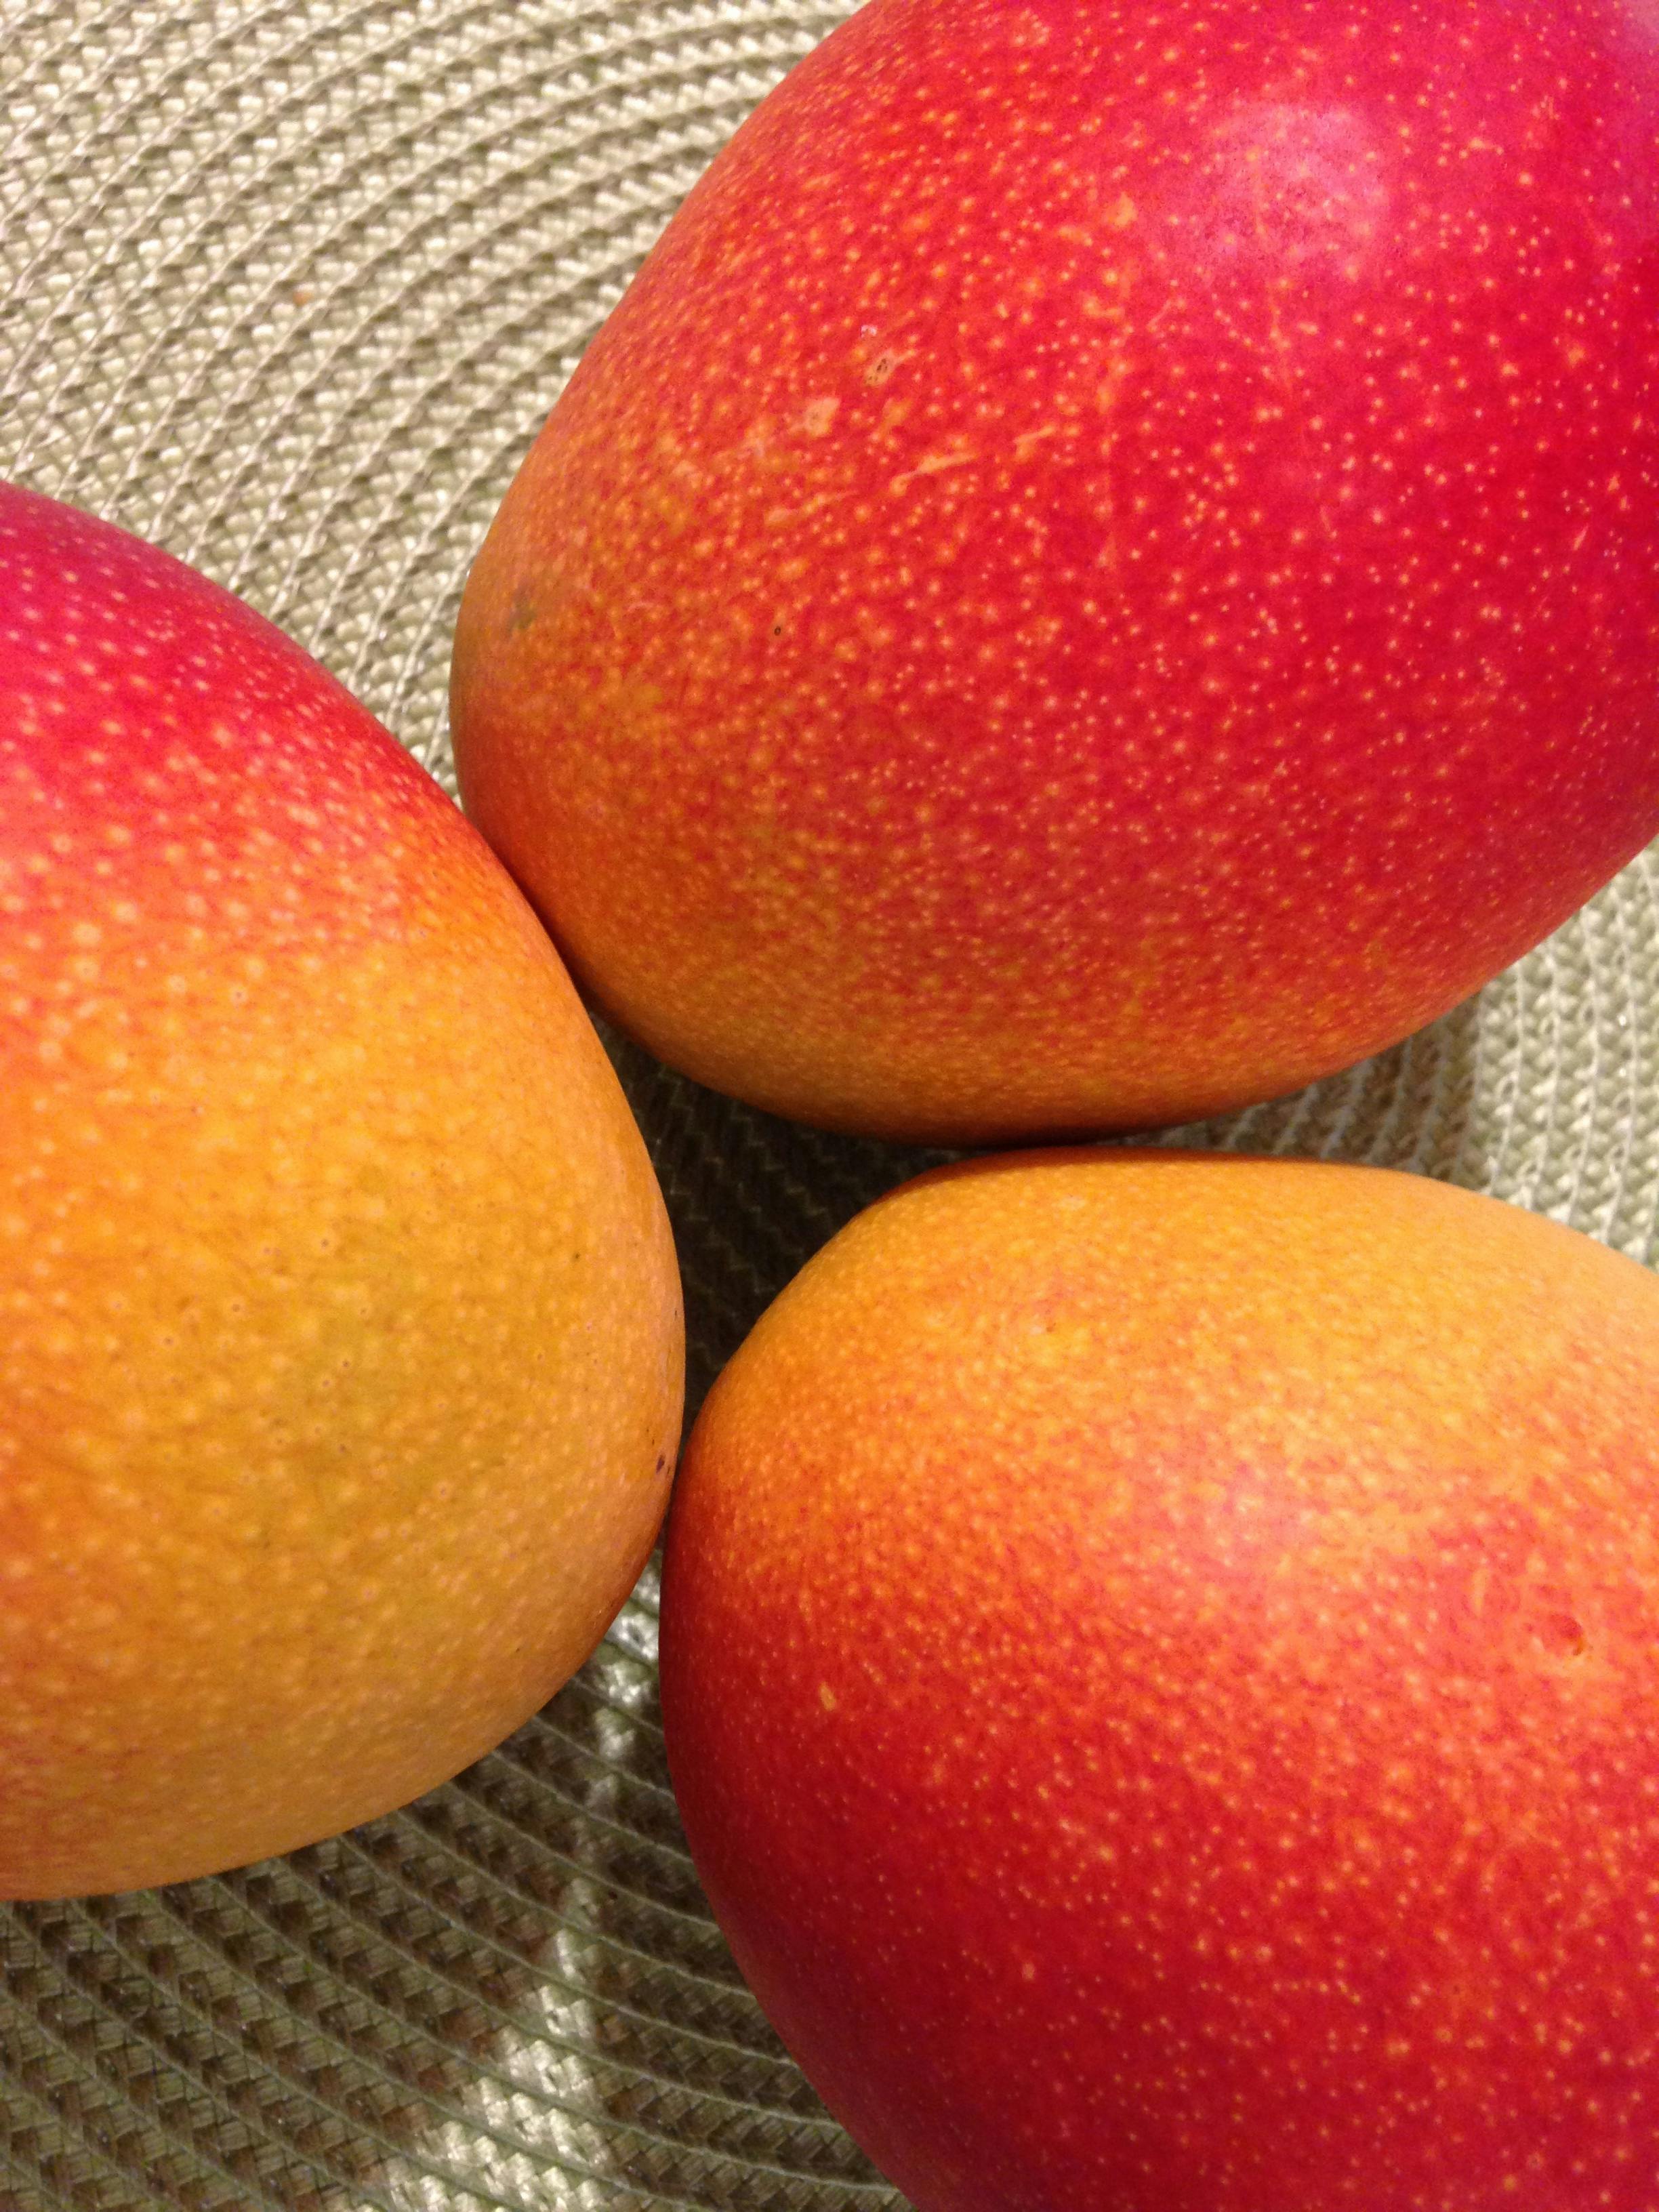 Mango Photos, Download The BEST Free Mango Stock Photos & HD Images